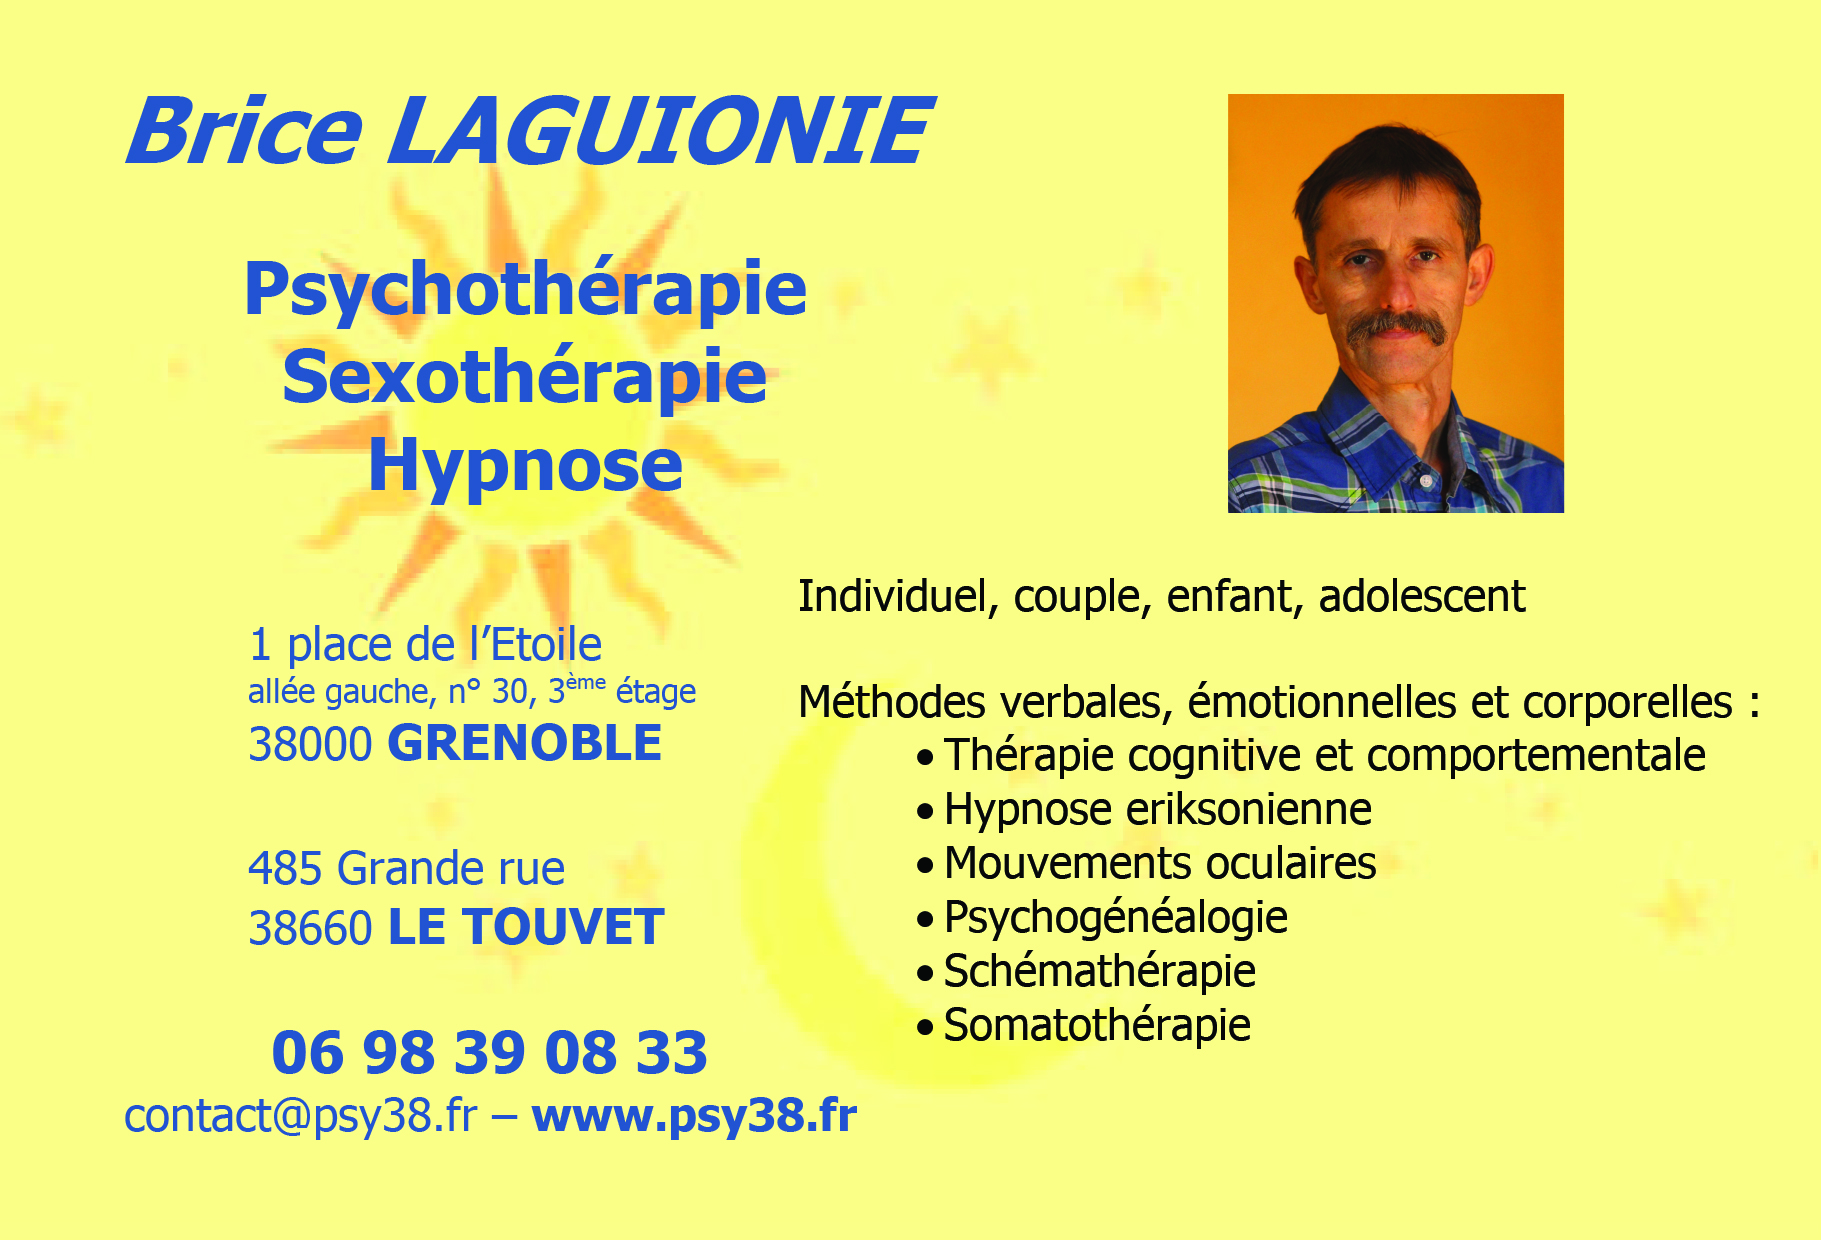 Brice Laguionie - Psychothérapie Sexologue Hypnose